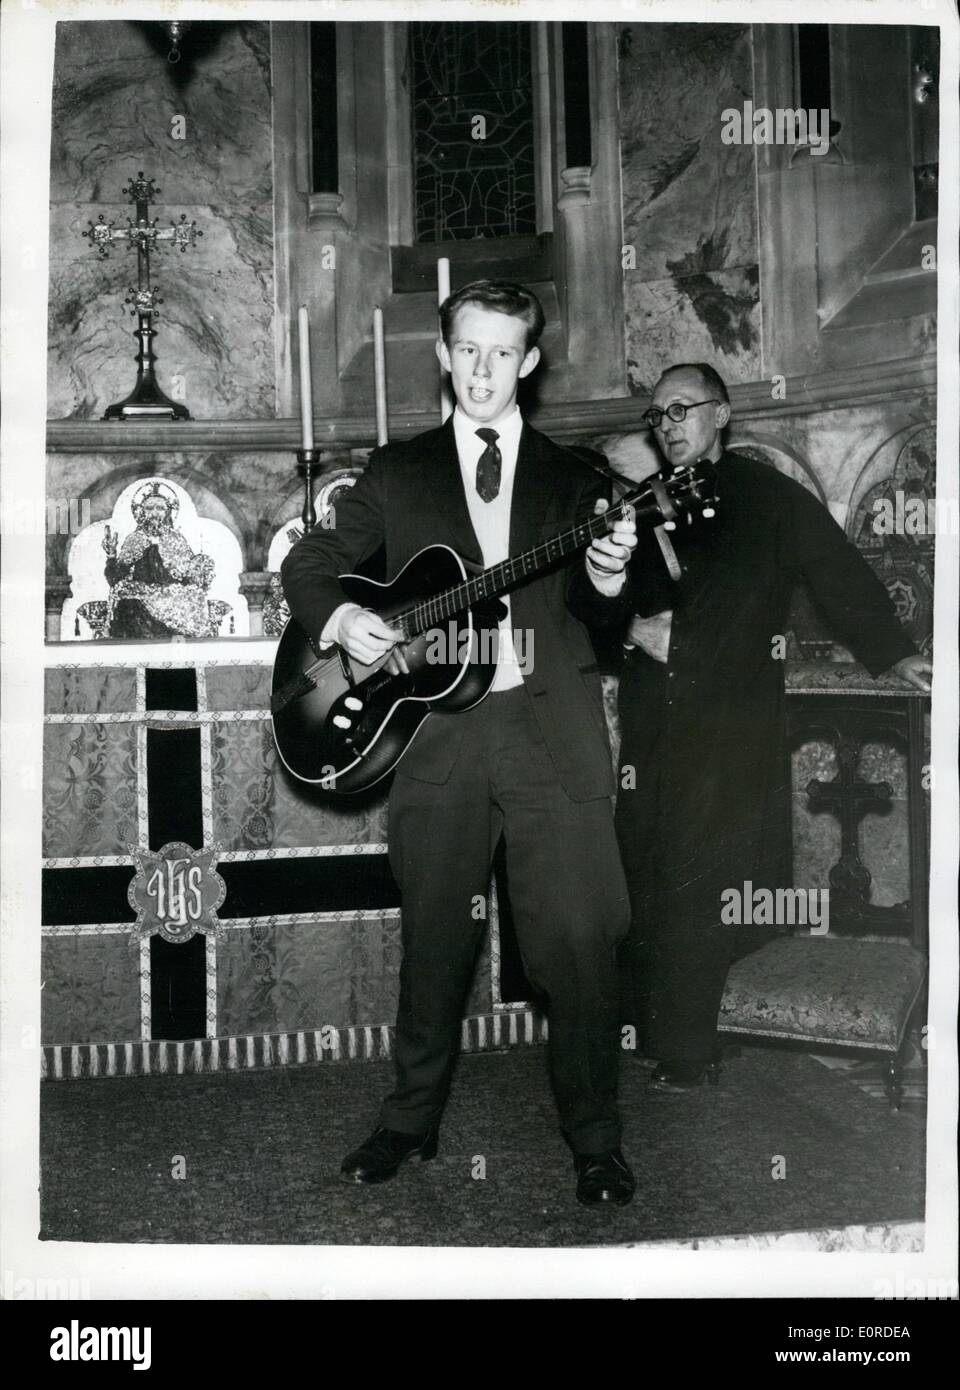 Mar. 10, 1959 - 10-3-59 New Rock-N-Roll singer makes first professional appearance at a church service Ã¢â‚¬â€œ Gary Mills, the Stock Photo